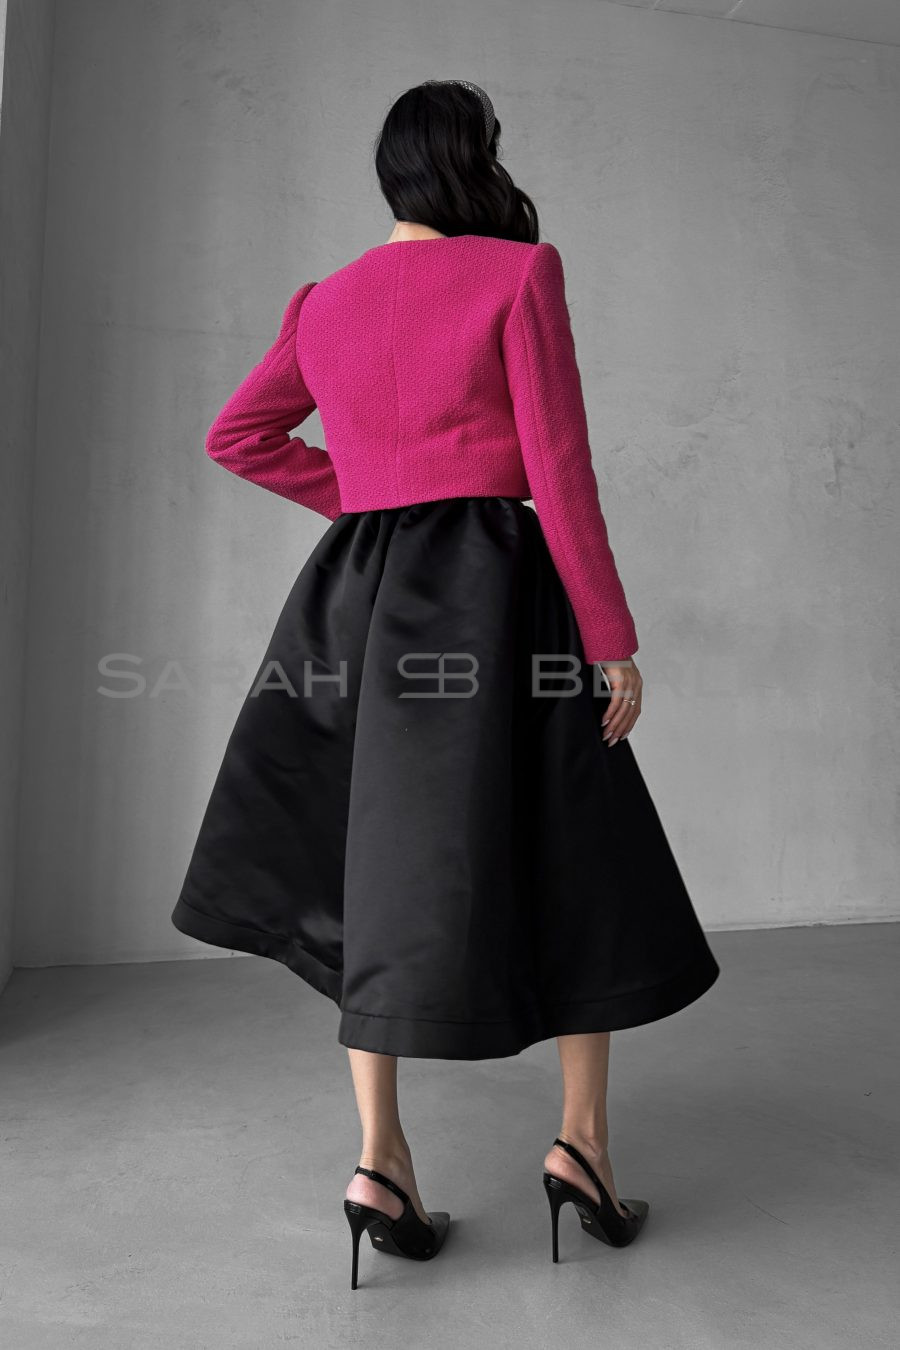 Full midi skirt with high waist